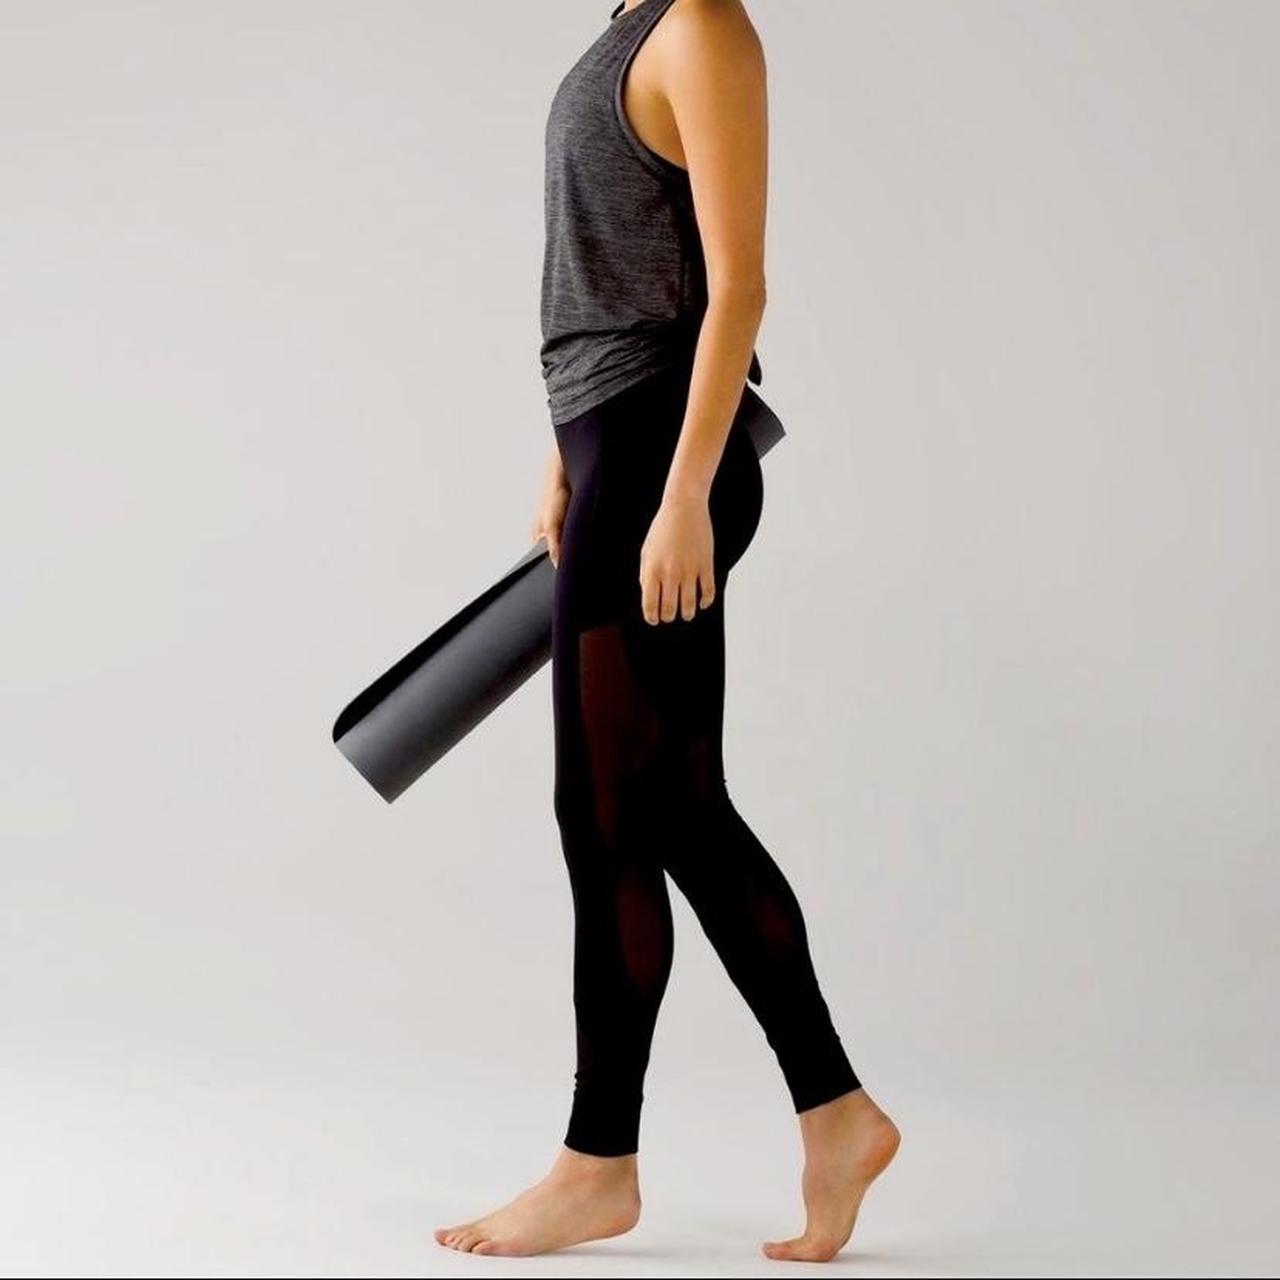 LIKE-NEW black lululemon leggings with mesh in the - Depop